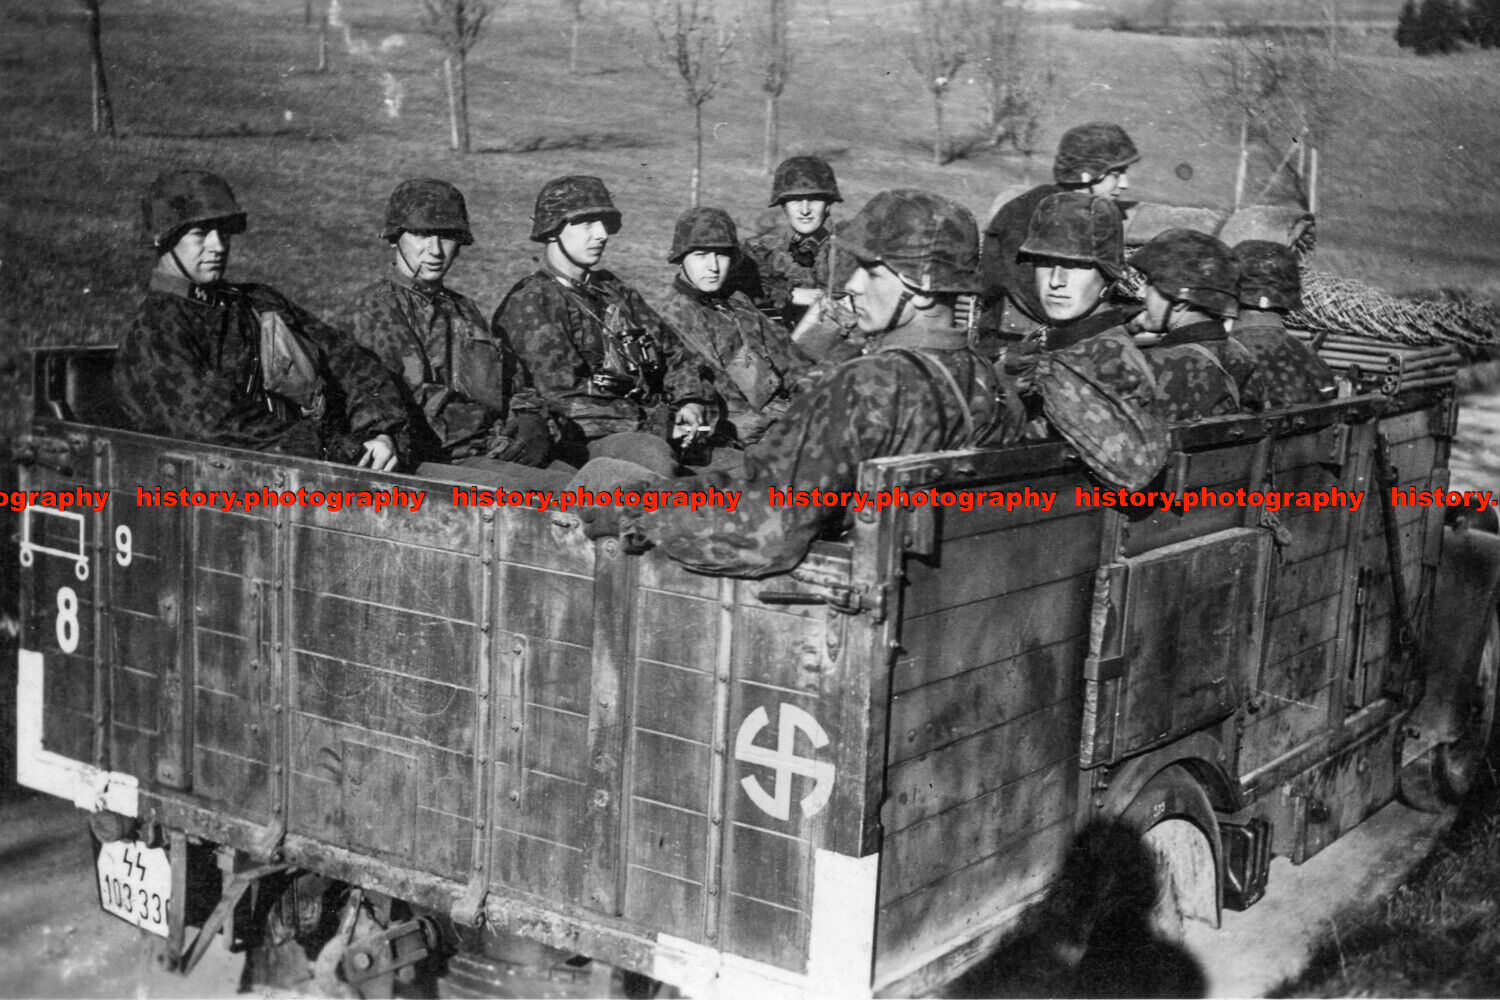 F007977 Waffen SS soldiers in truck. WW2